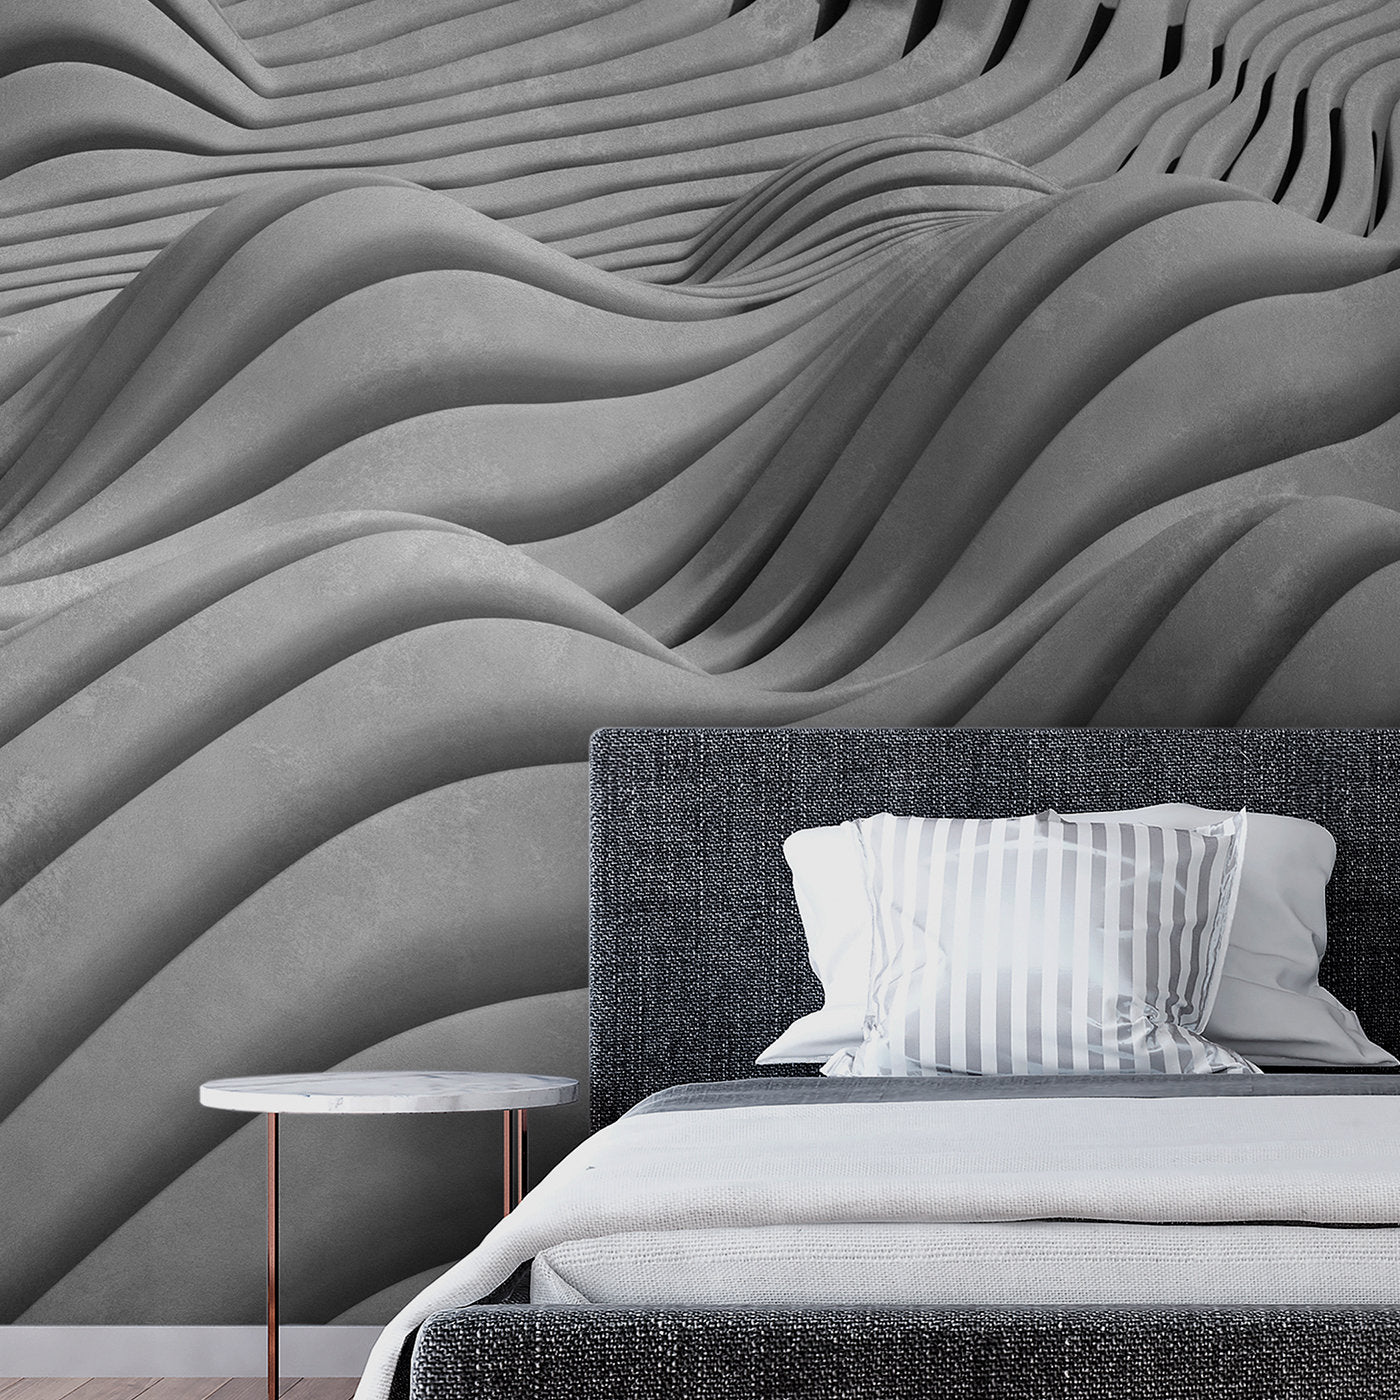 Waves Textured Wallpaper #2 - Alternative view 1